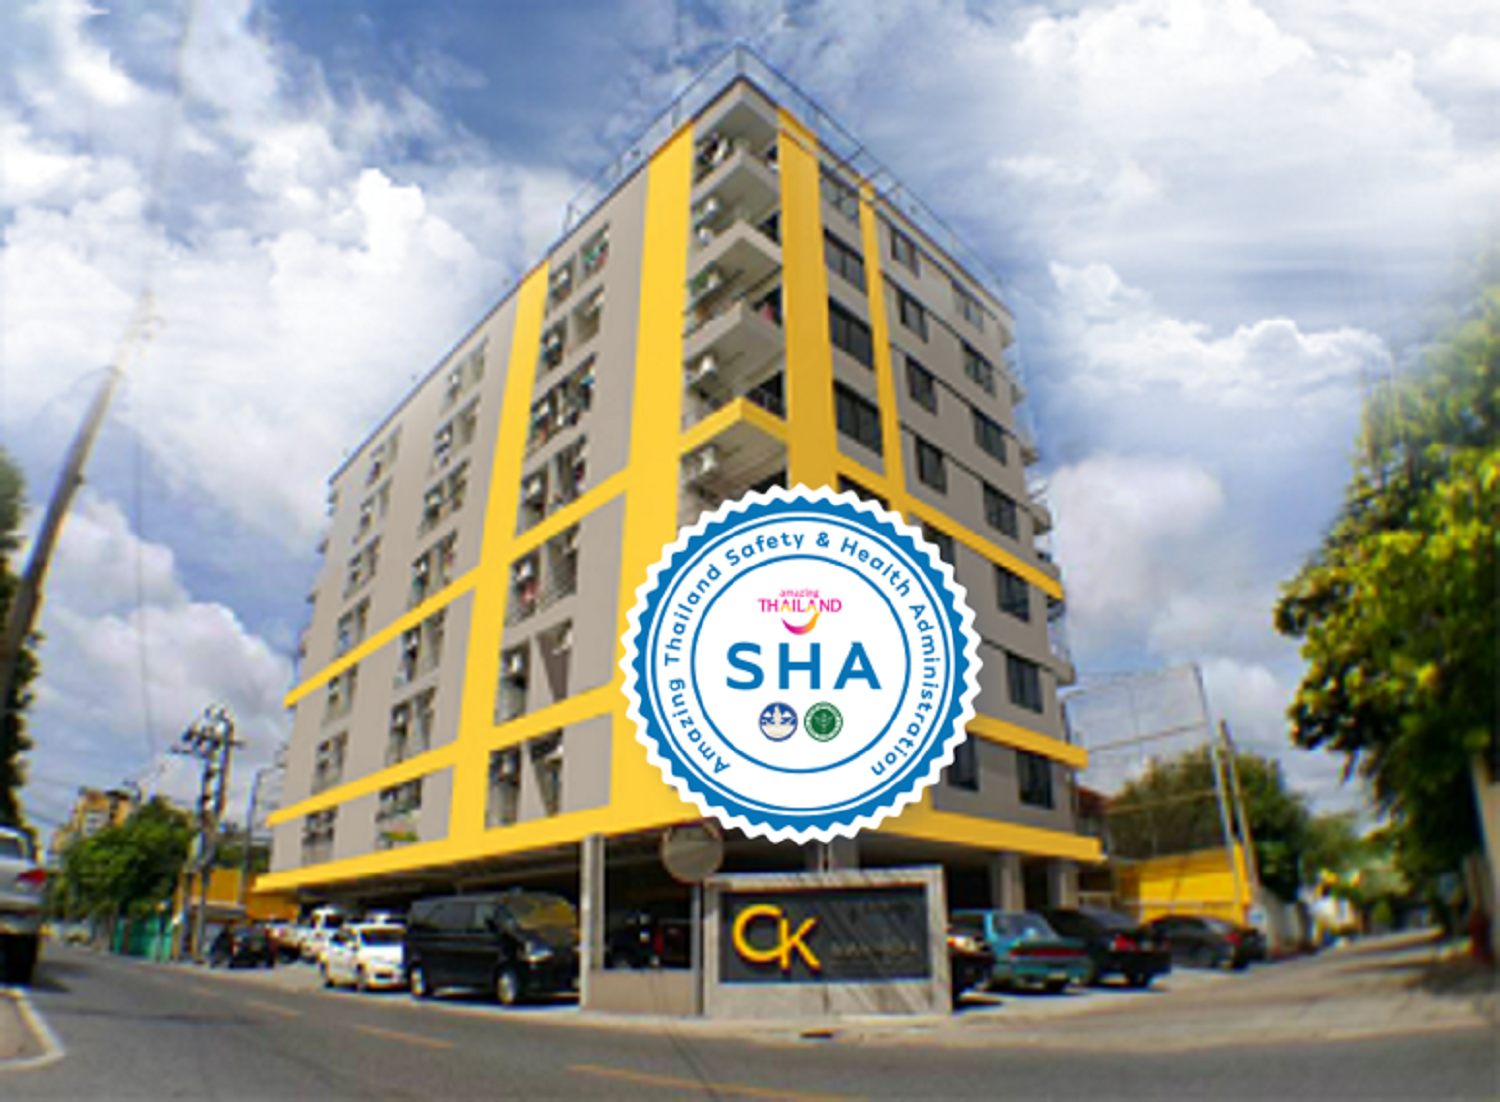 CK2 Hotel - SHA Certified - Image 0